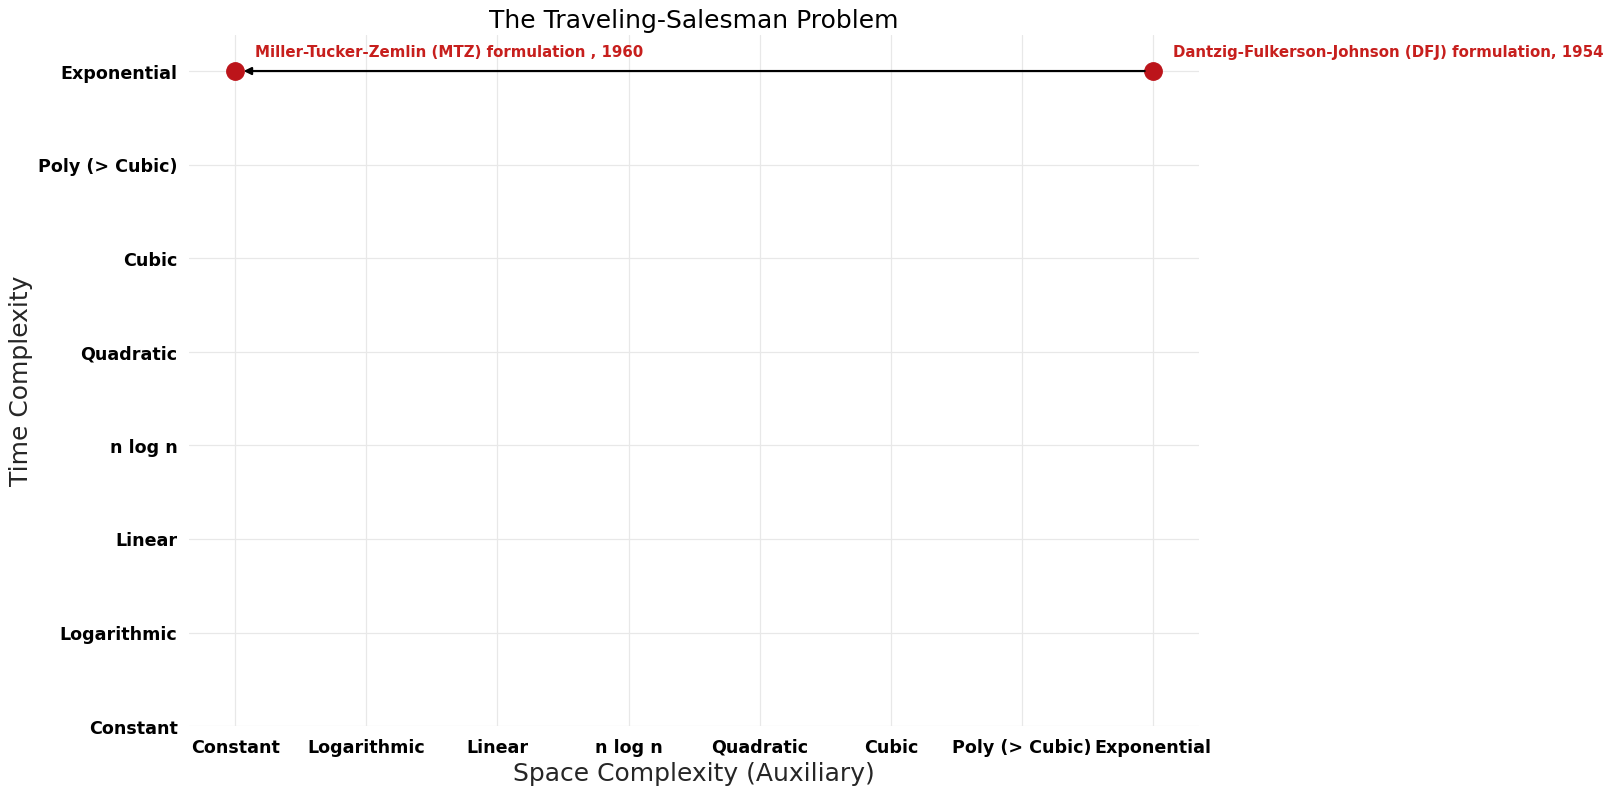 File:The Traveling-Salesman Problem - Pareto Frontier.png